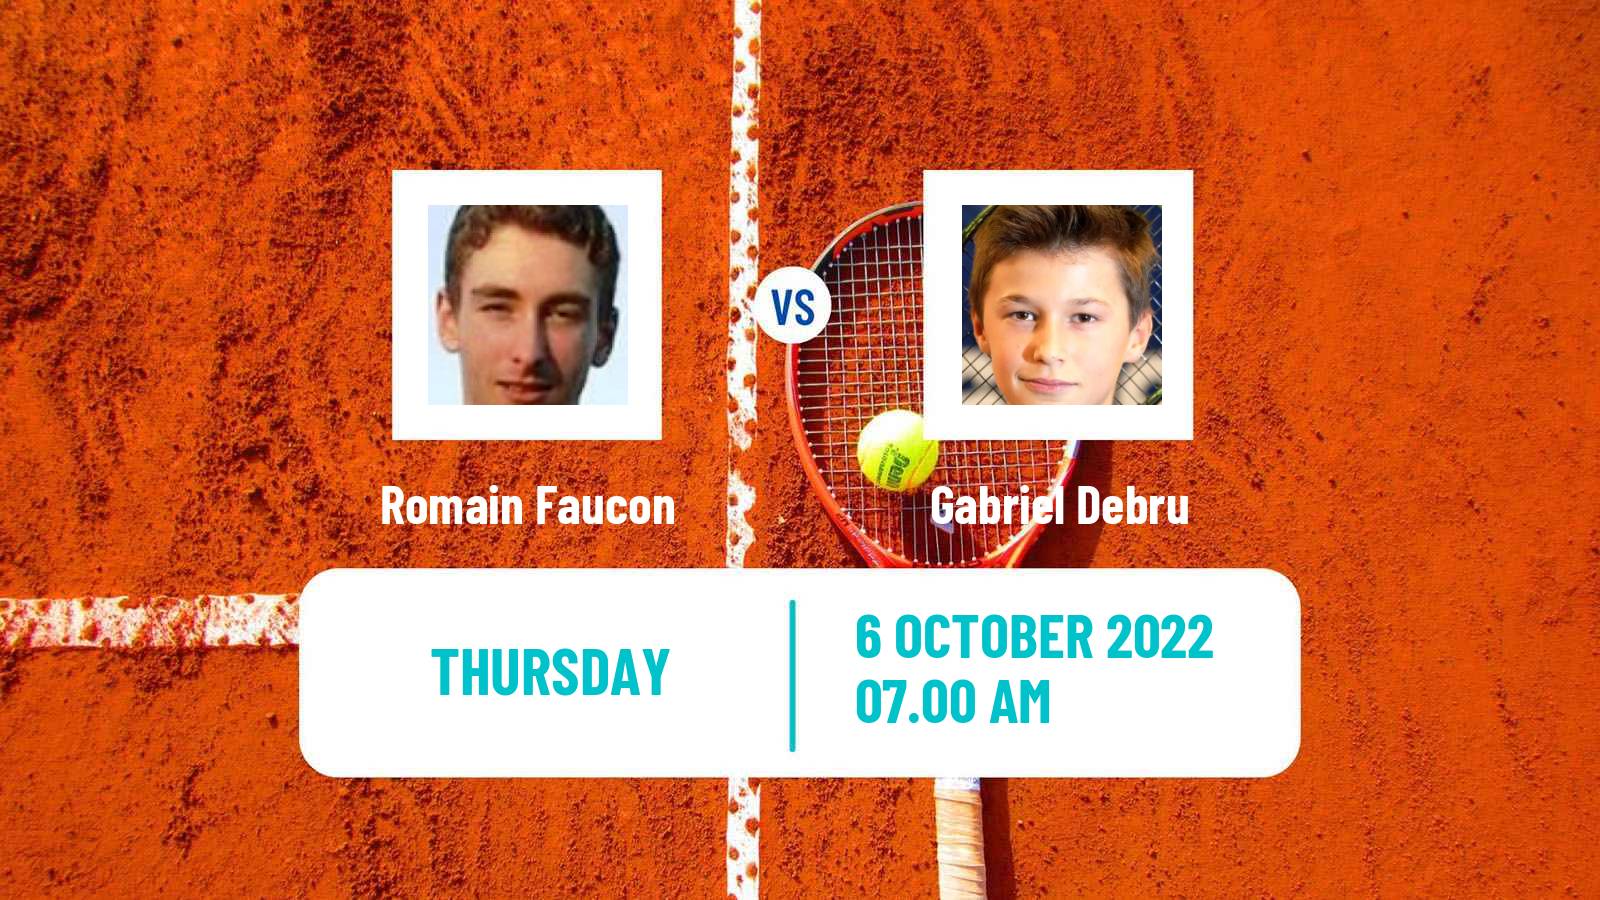 Tennis ITF Tournaments Romain Faucon - Gabriel Debru